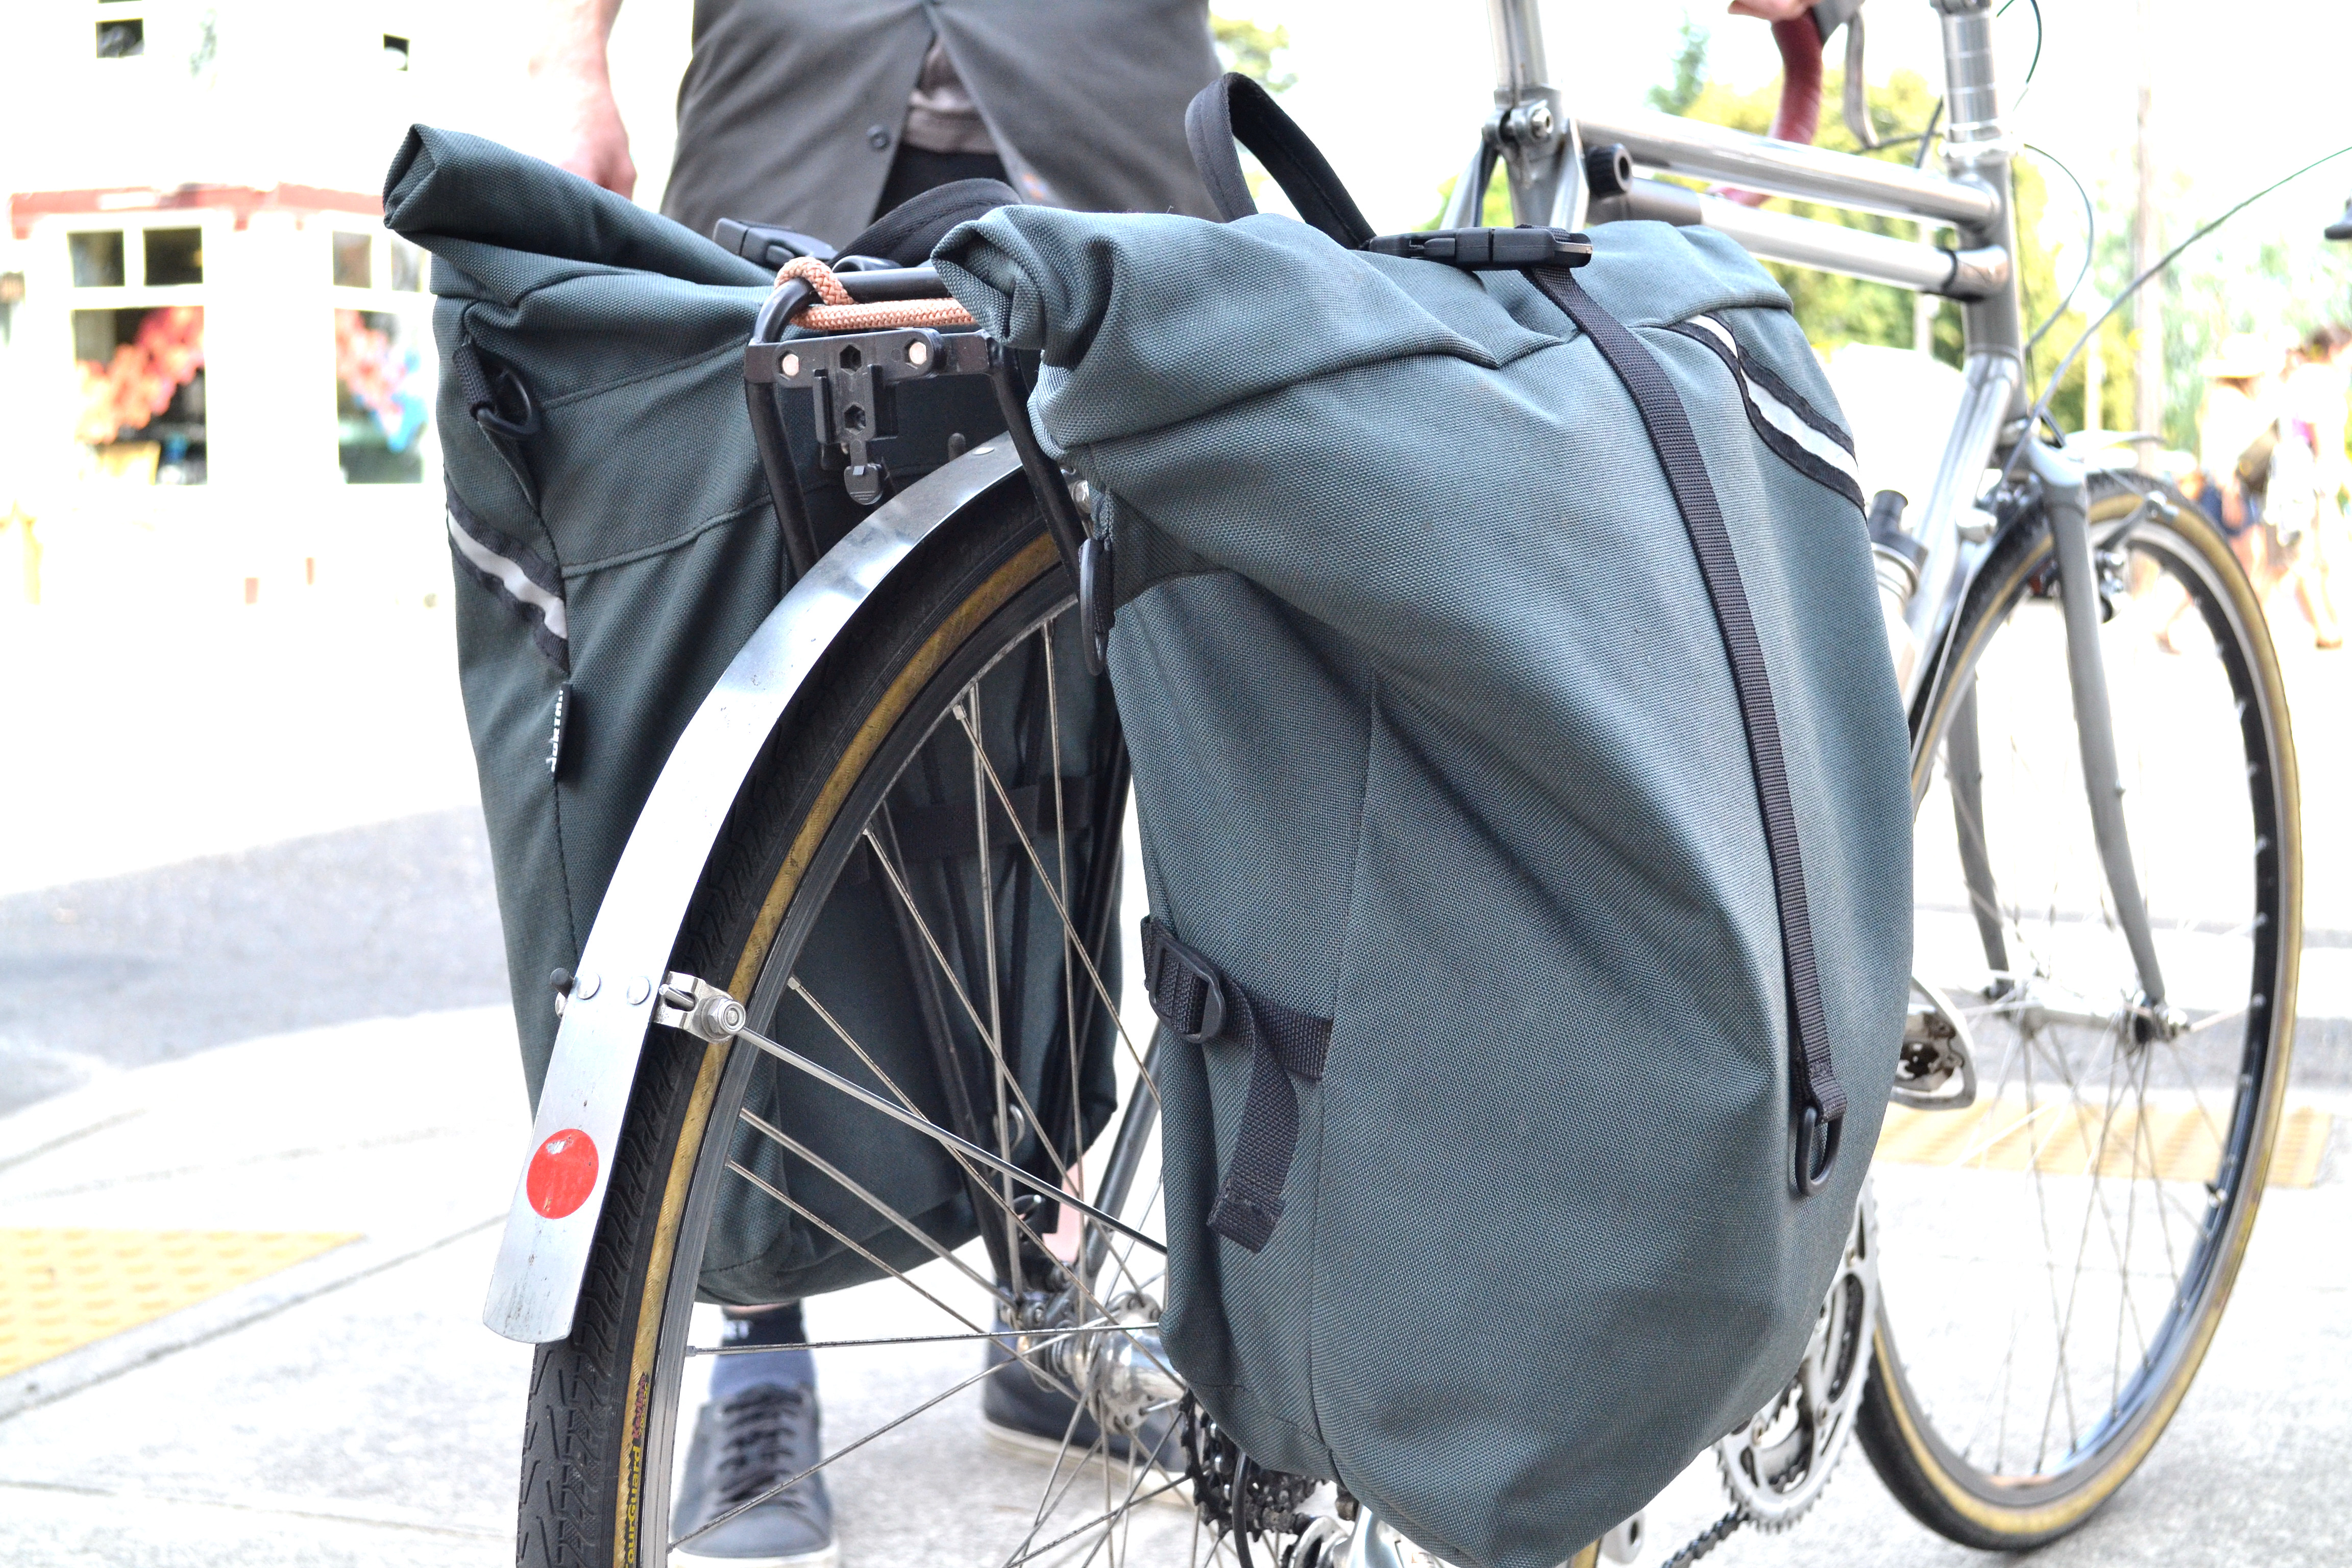 Garneck Bike Basket Metal Wire Front Bag Rear Hanging Bike Basket Bicycle Bag Cargo Rack